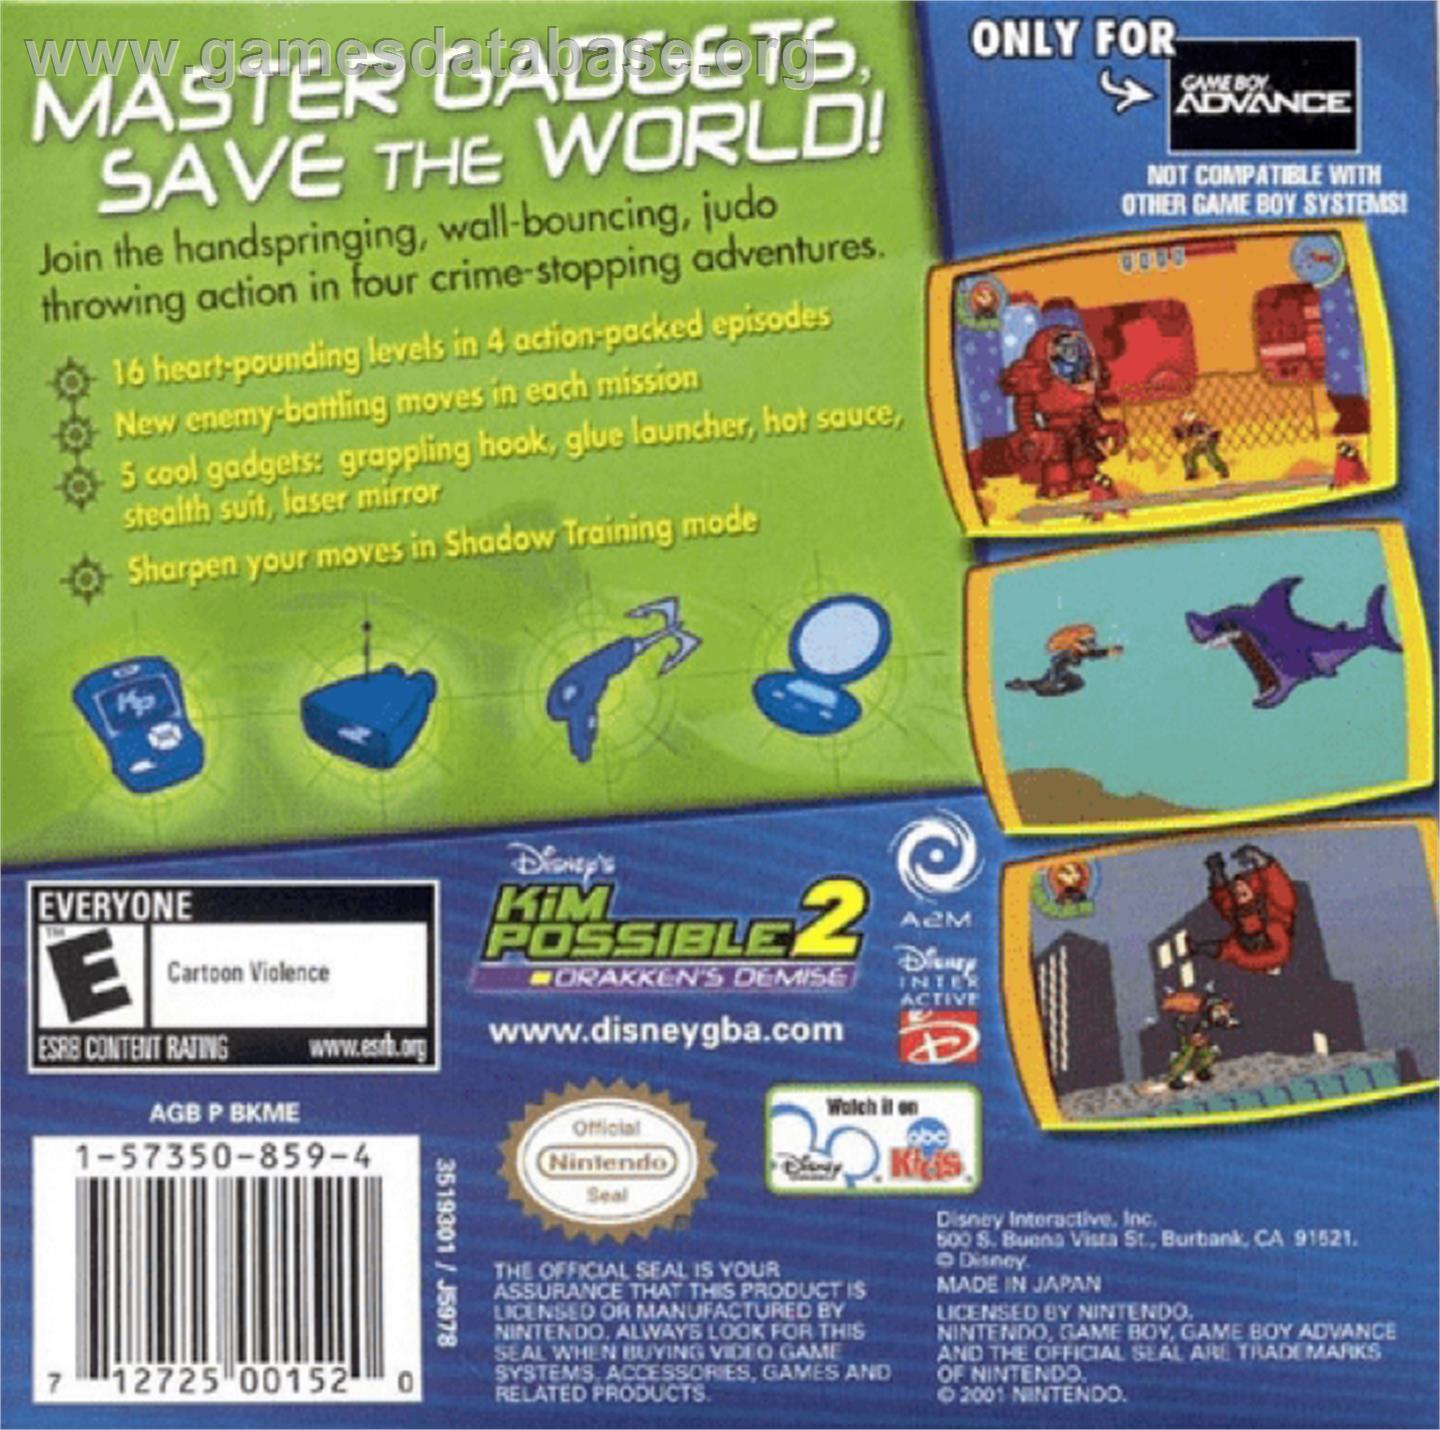 Kim Possible 2: Drakken's Demise - Nintendo Game Boy Advance - Artwork - Box Back